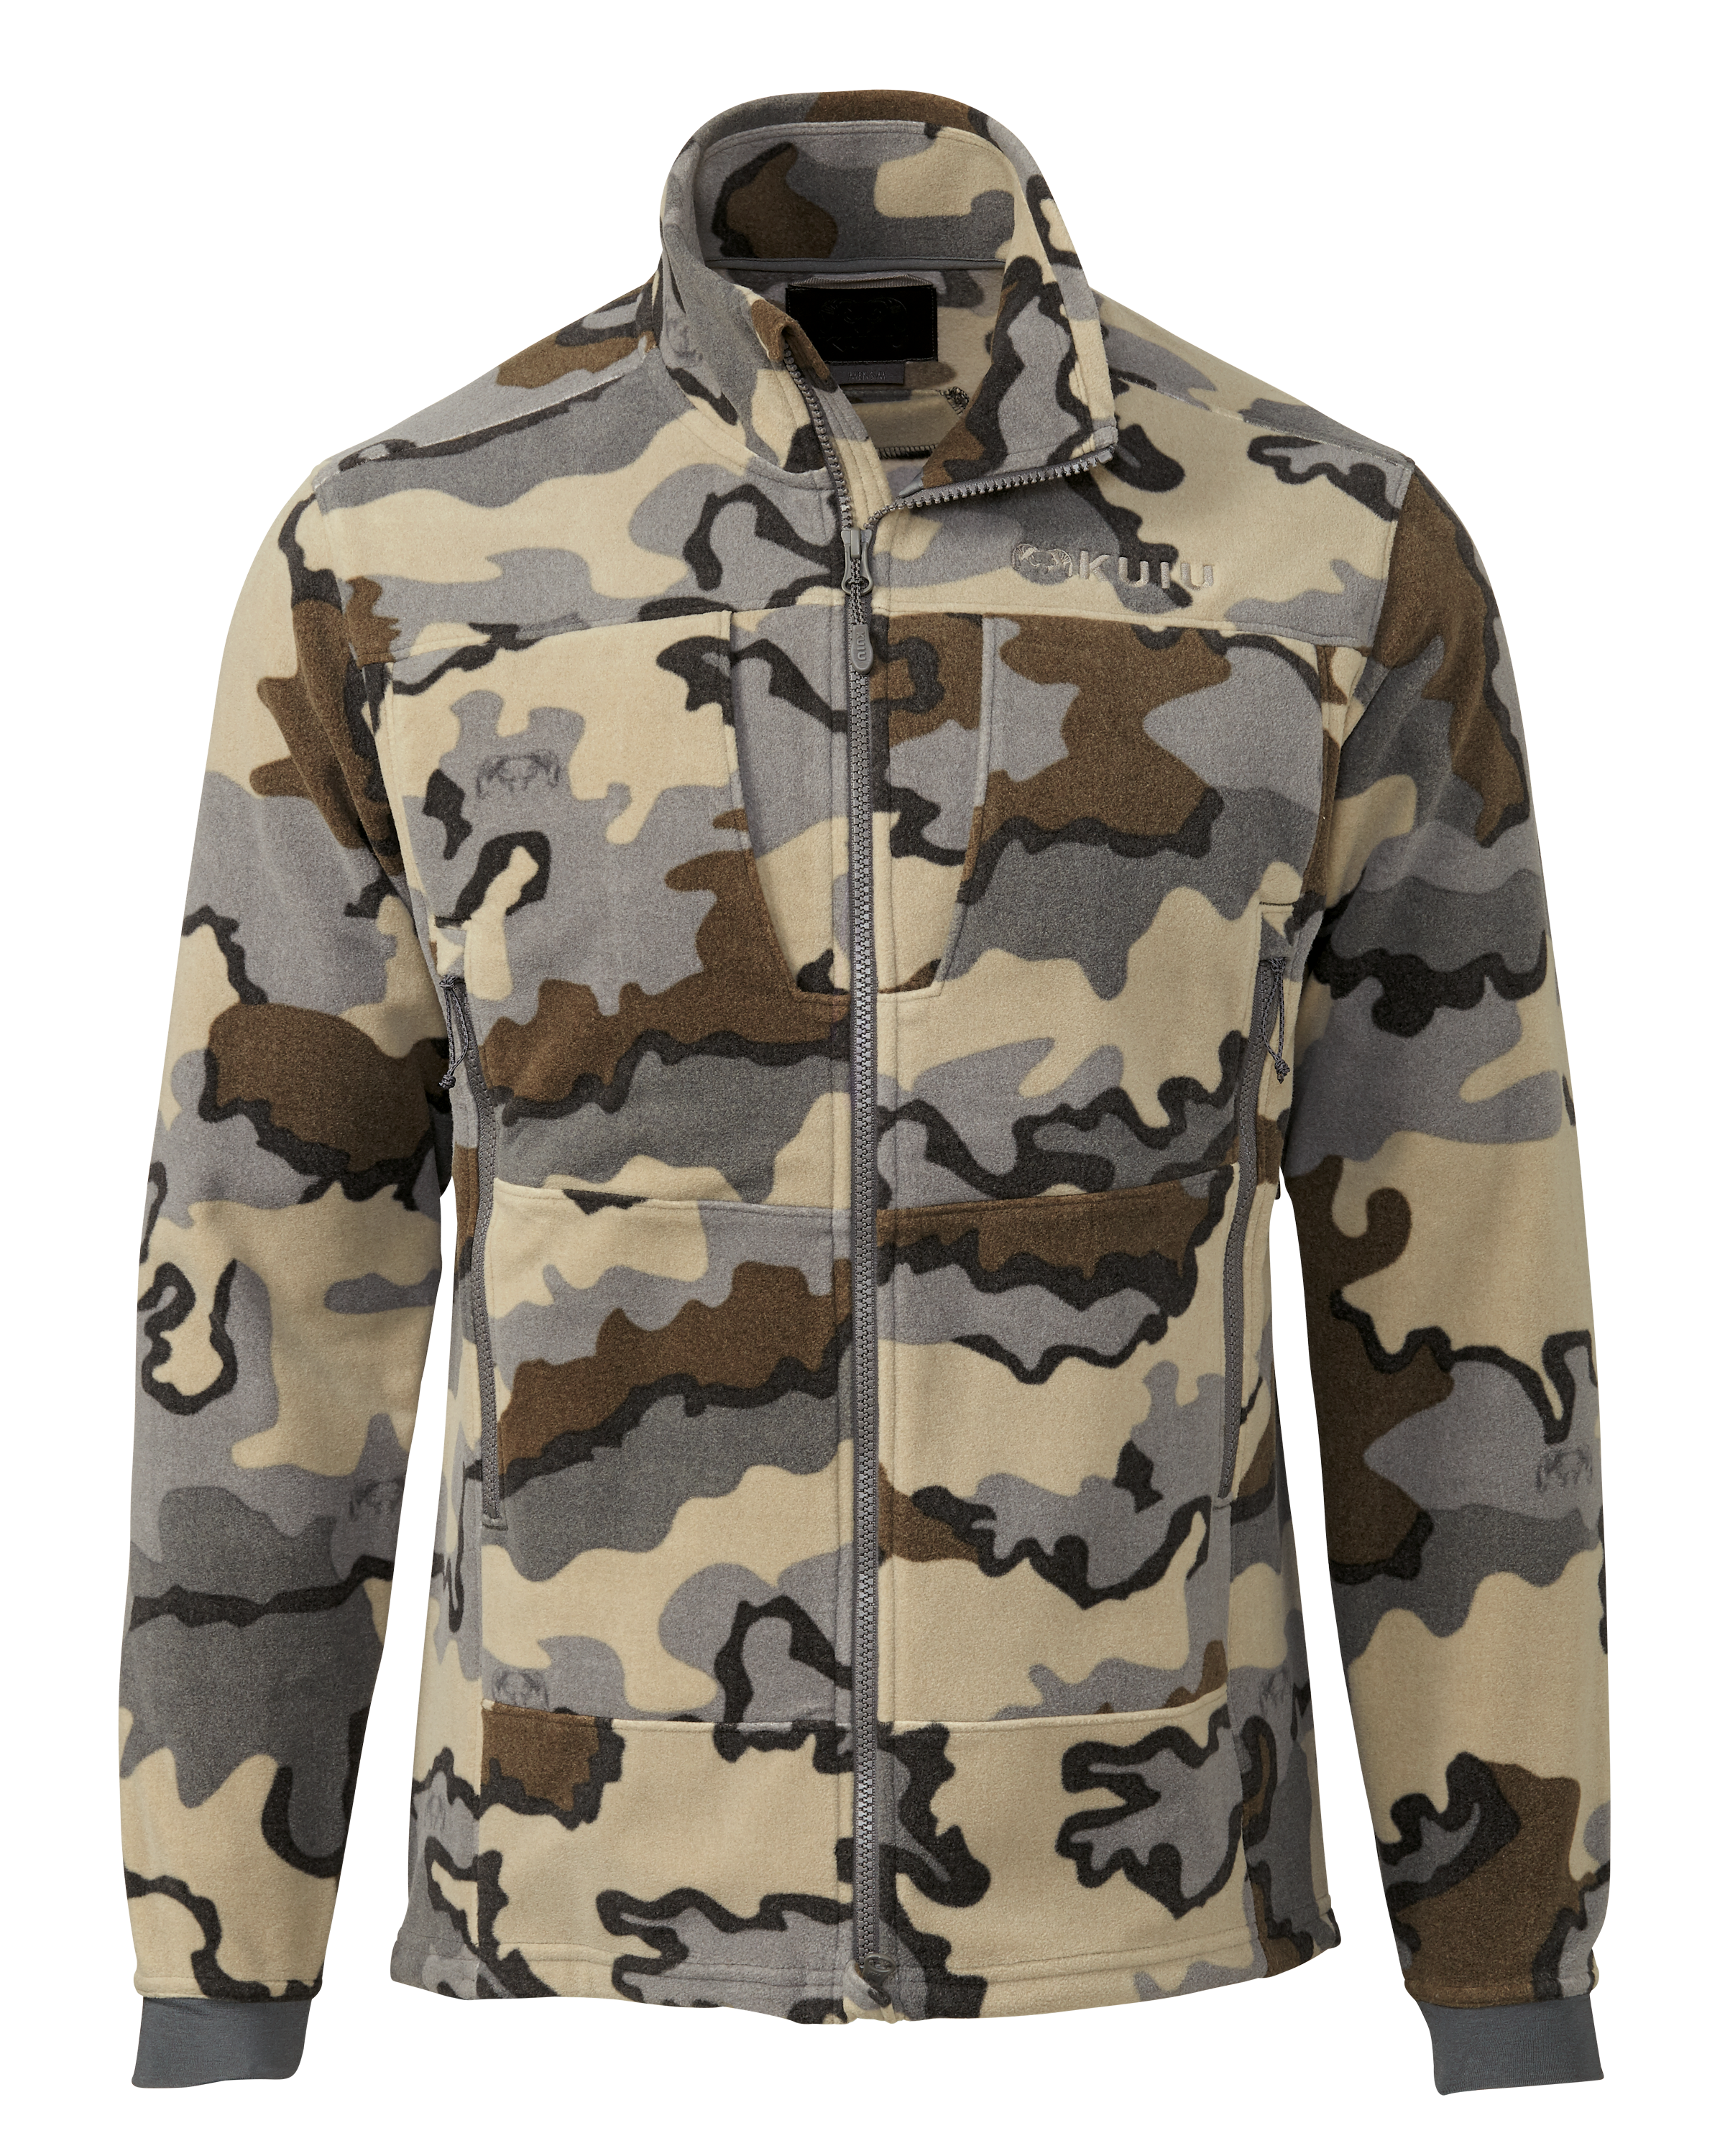 KUIU Wind Pro Fleece Full Zip Hunting Jacket in Vias | Size Medium